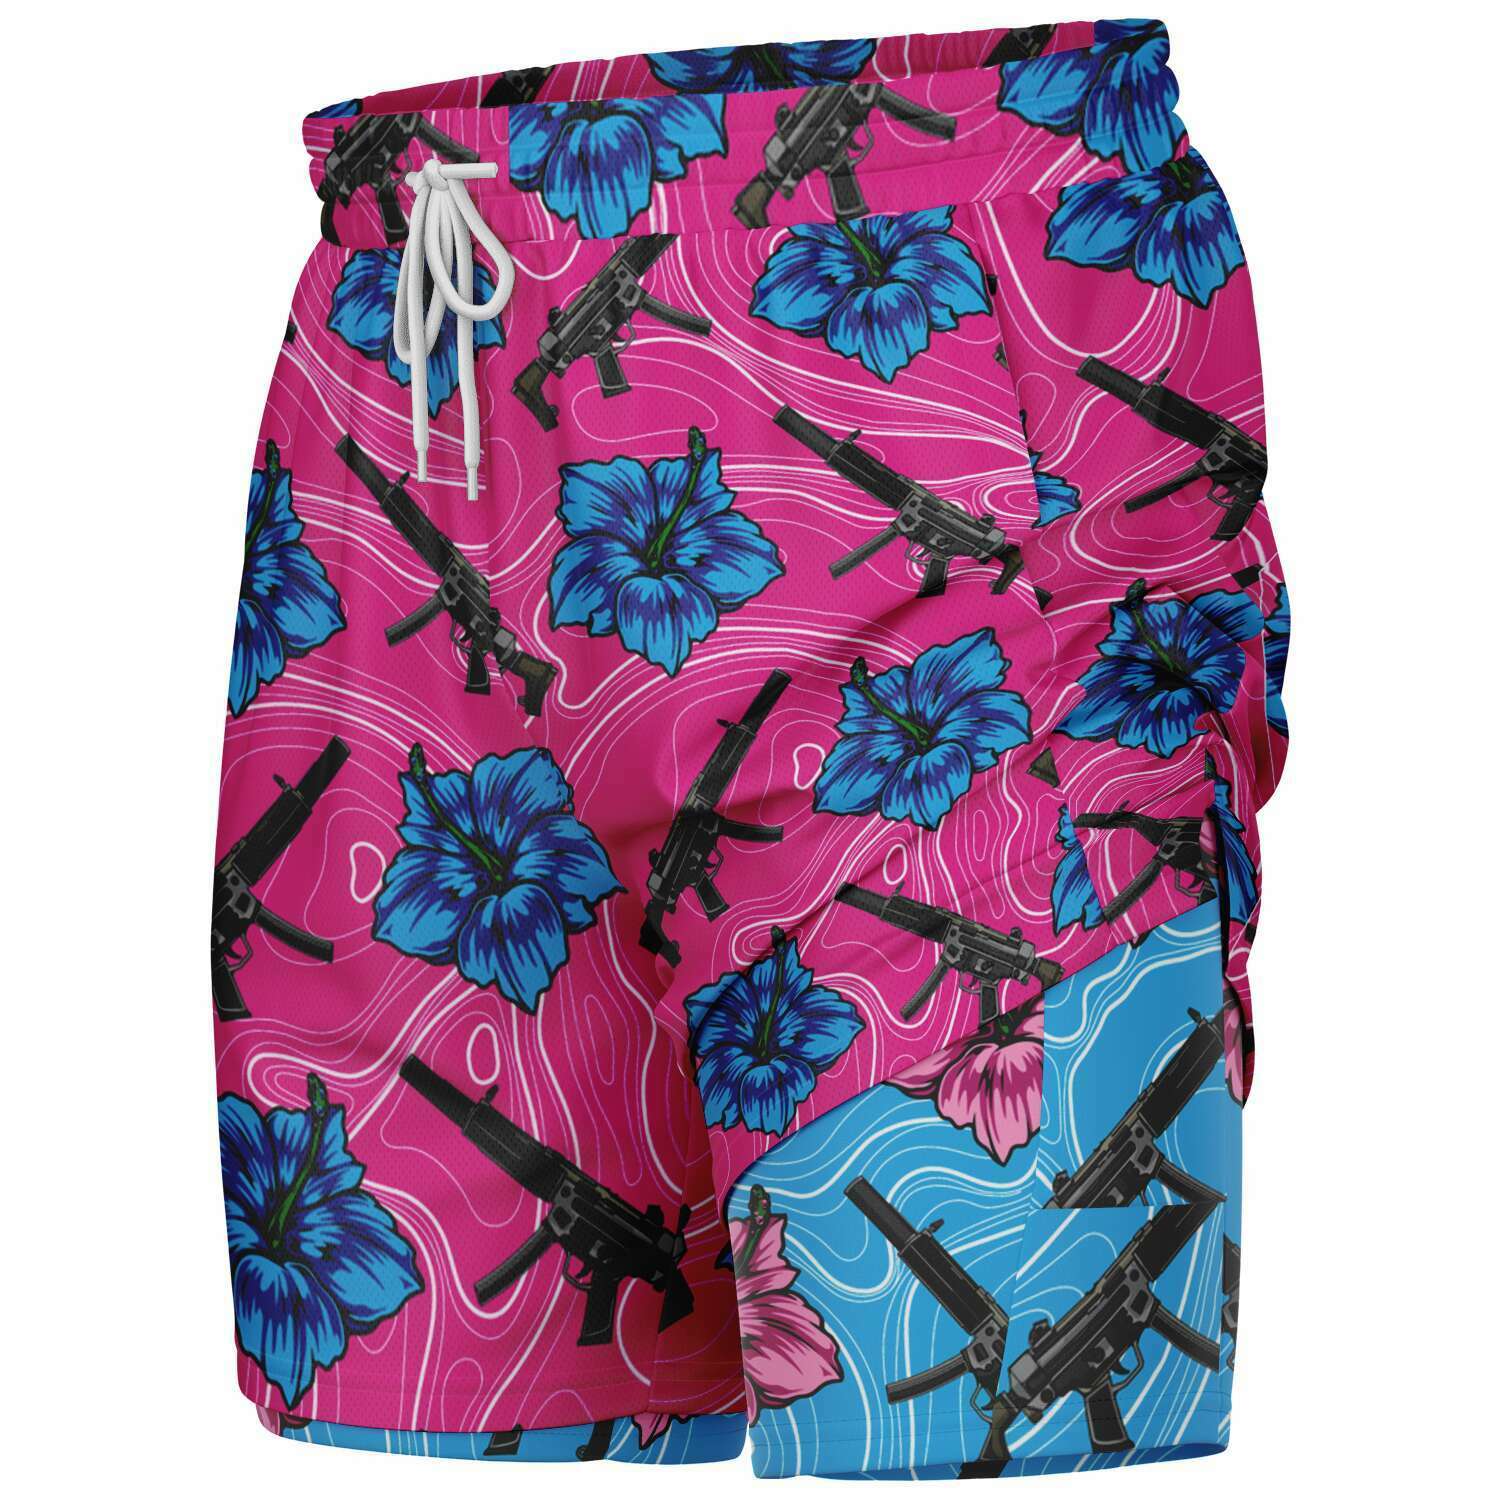 Rad Palm High Capacity Hibiscus Men's 2-in-1 Shorts